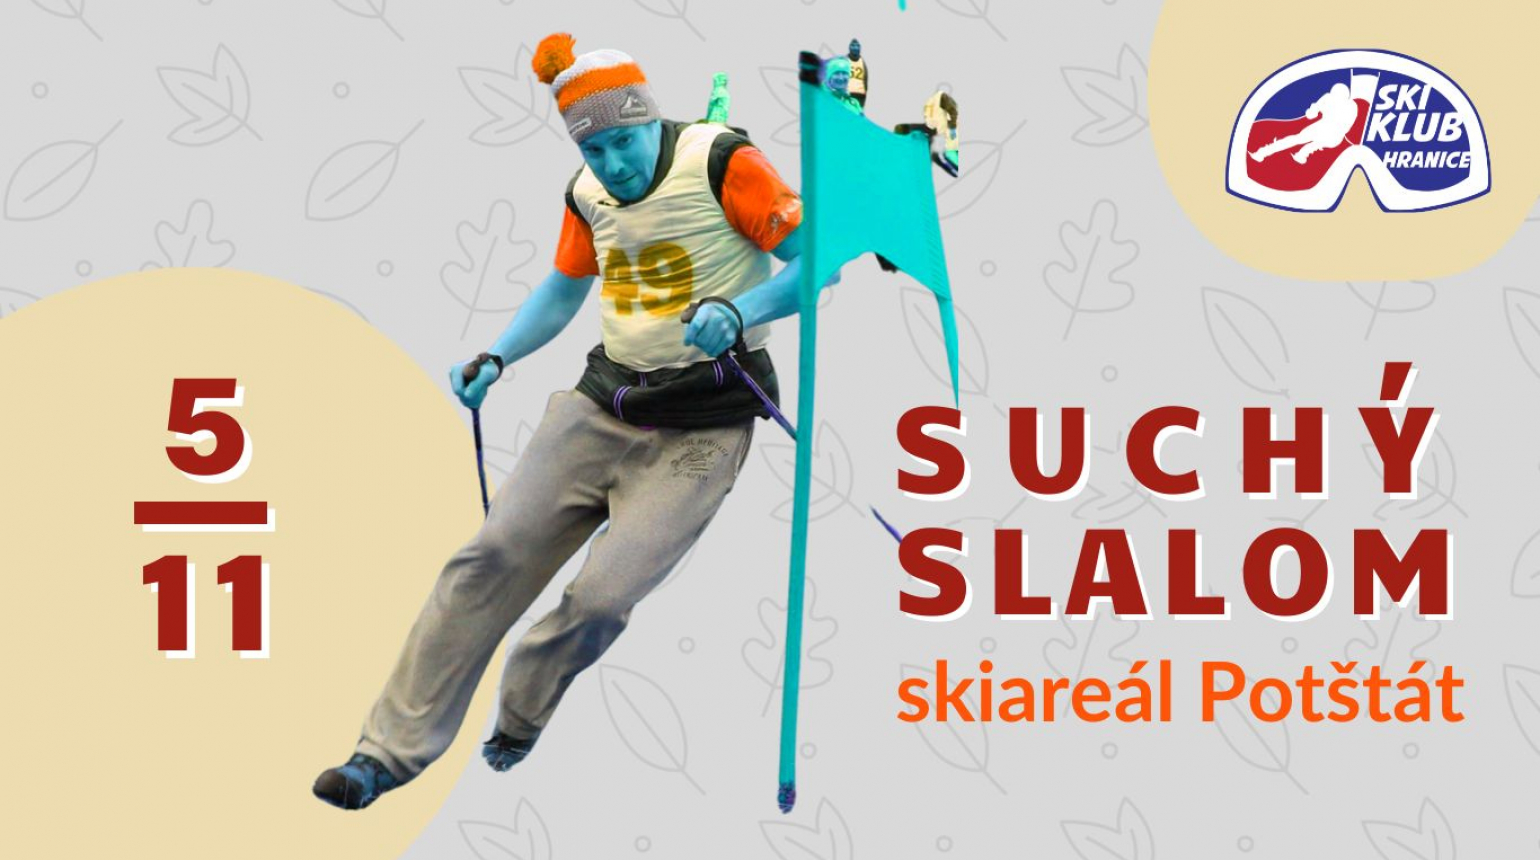 Suchý slalom - SKI klub Hranice